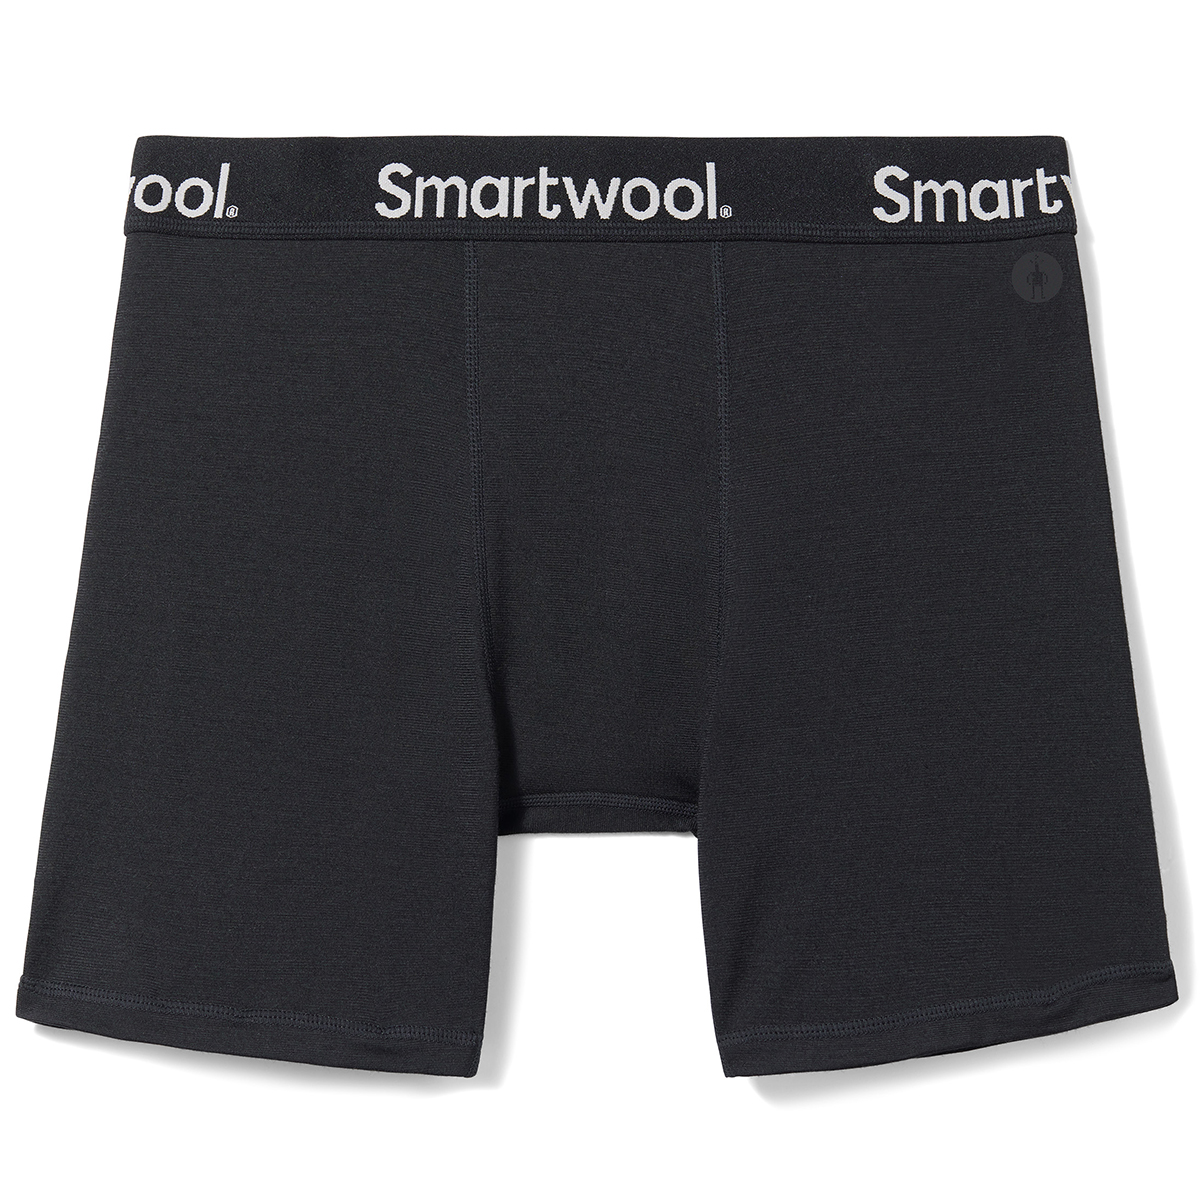 Smartwool Men's Boxer Brief Boxed